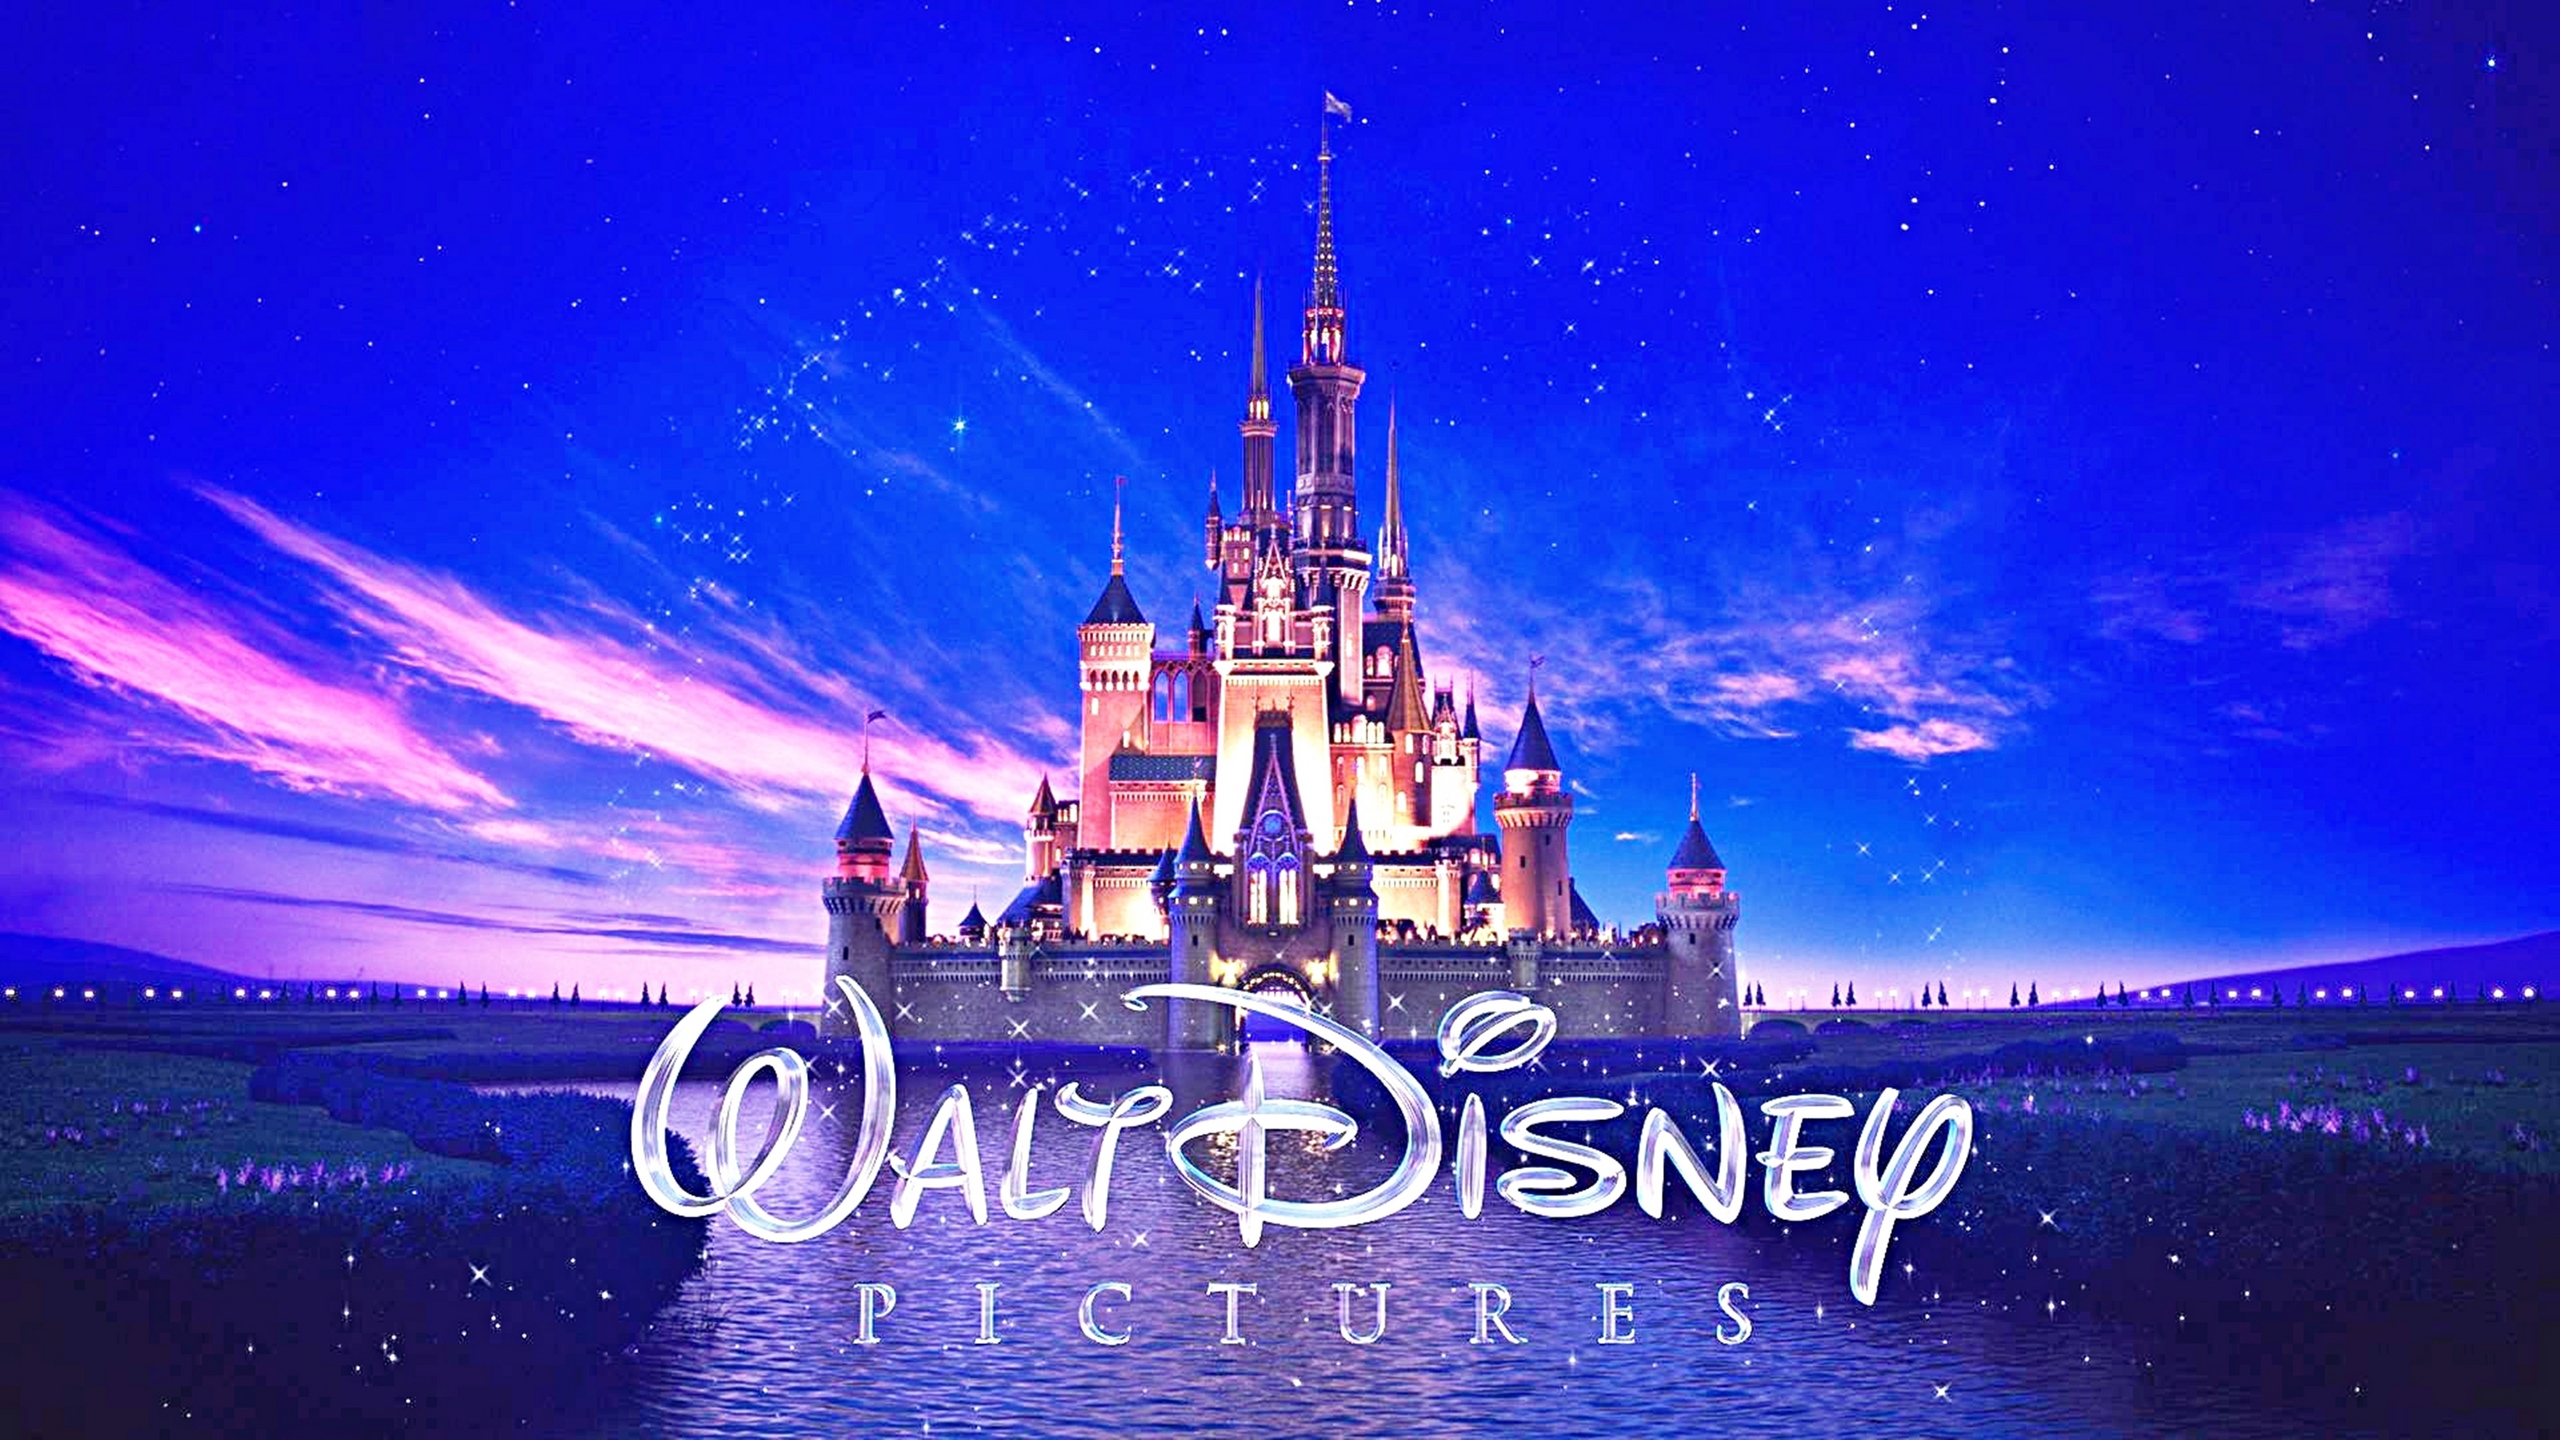 Disney Castle Background HD wallpaper background 2560x1440